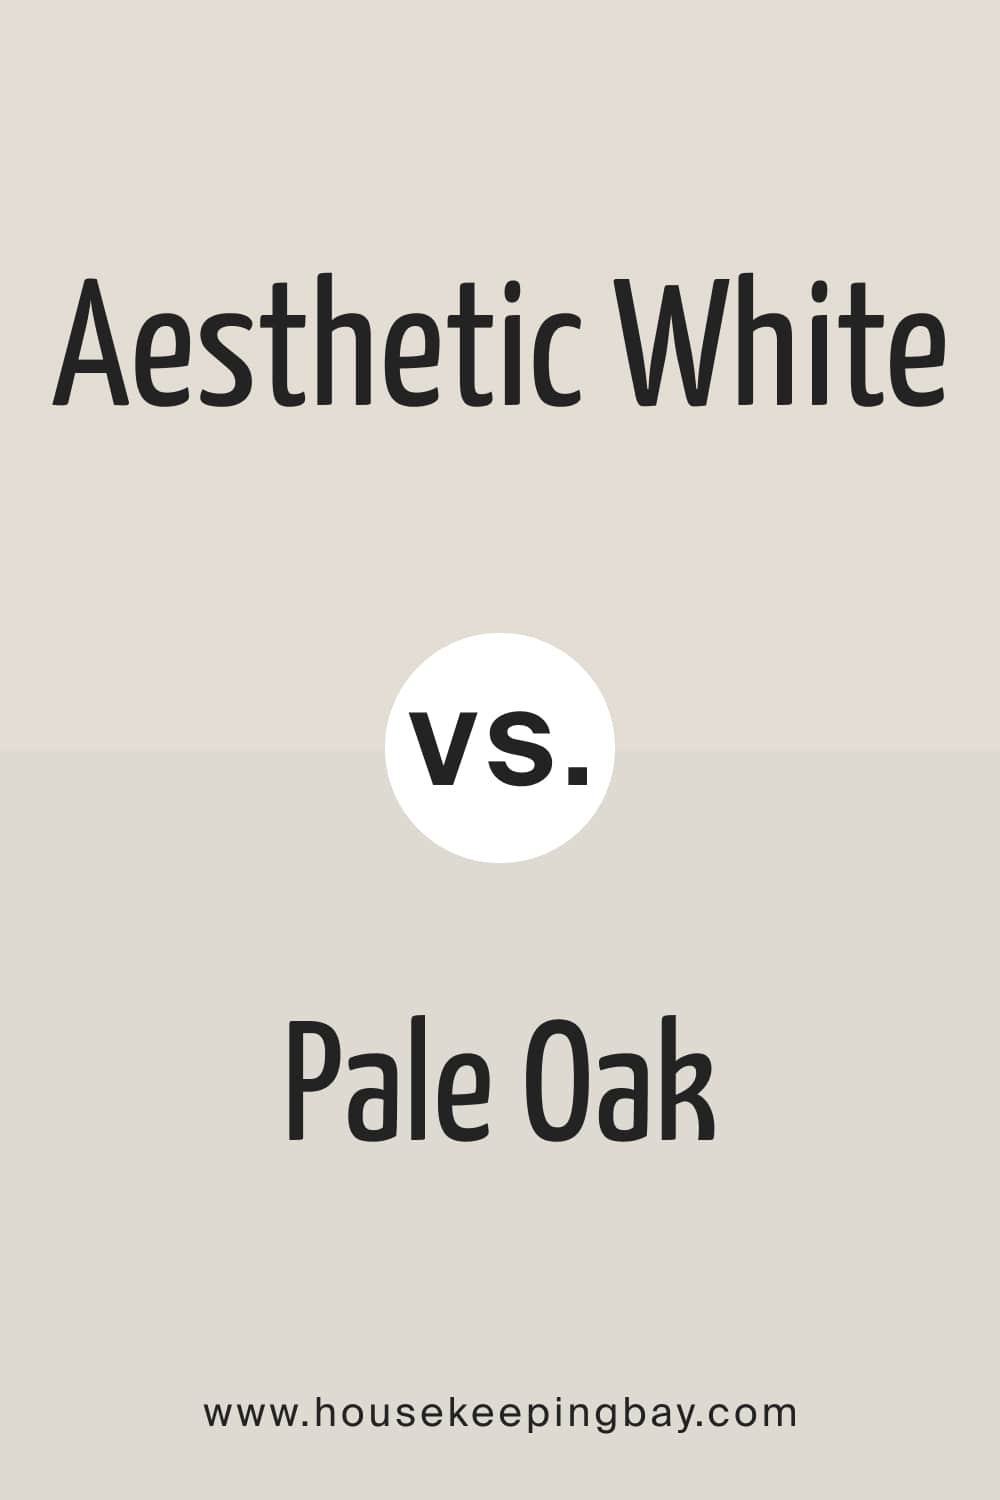 Aesthetic White vs. Pale Oak